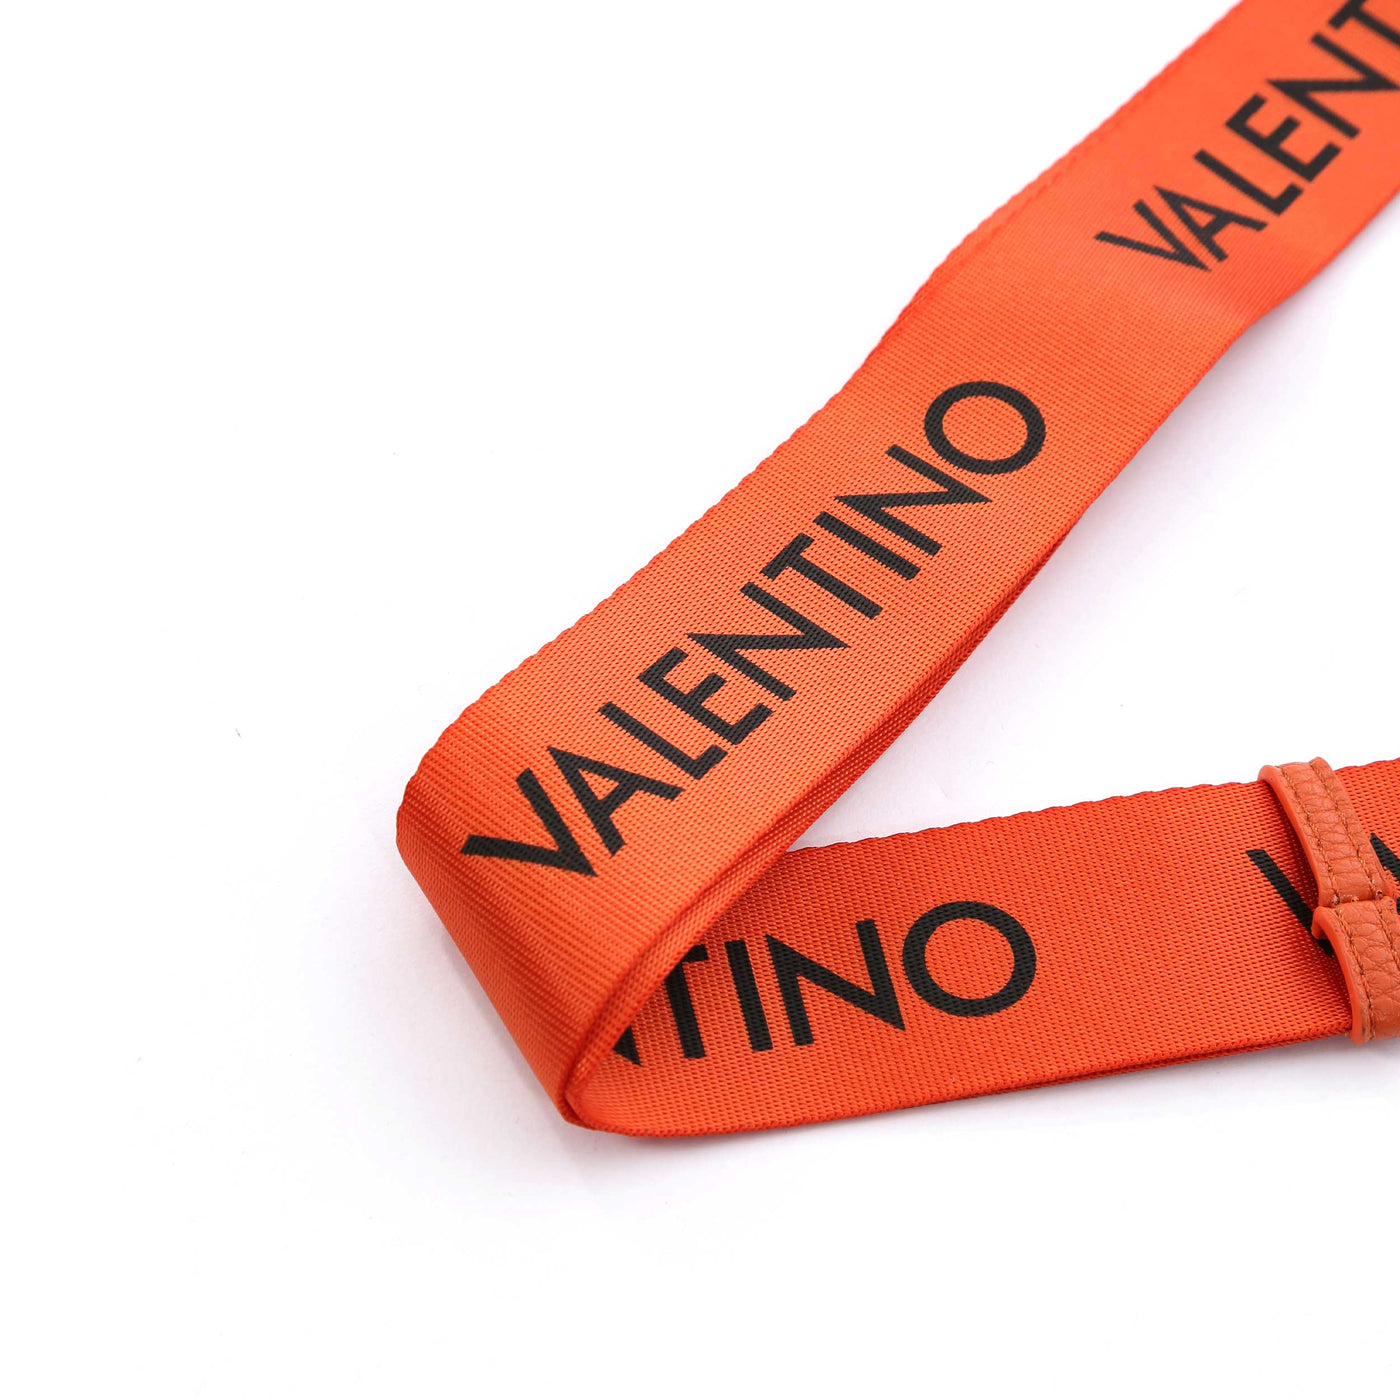 Valentino Bags Pattie Camera Bag in Arancio Orange Strap